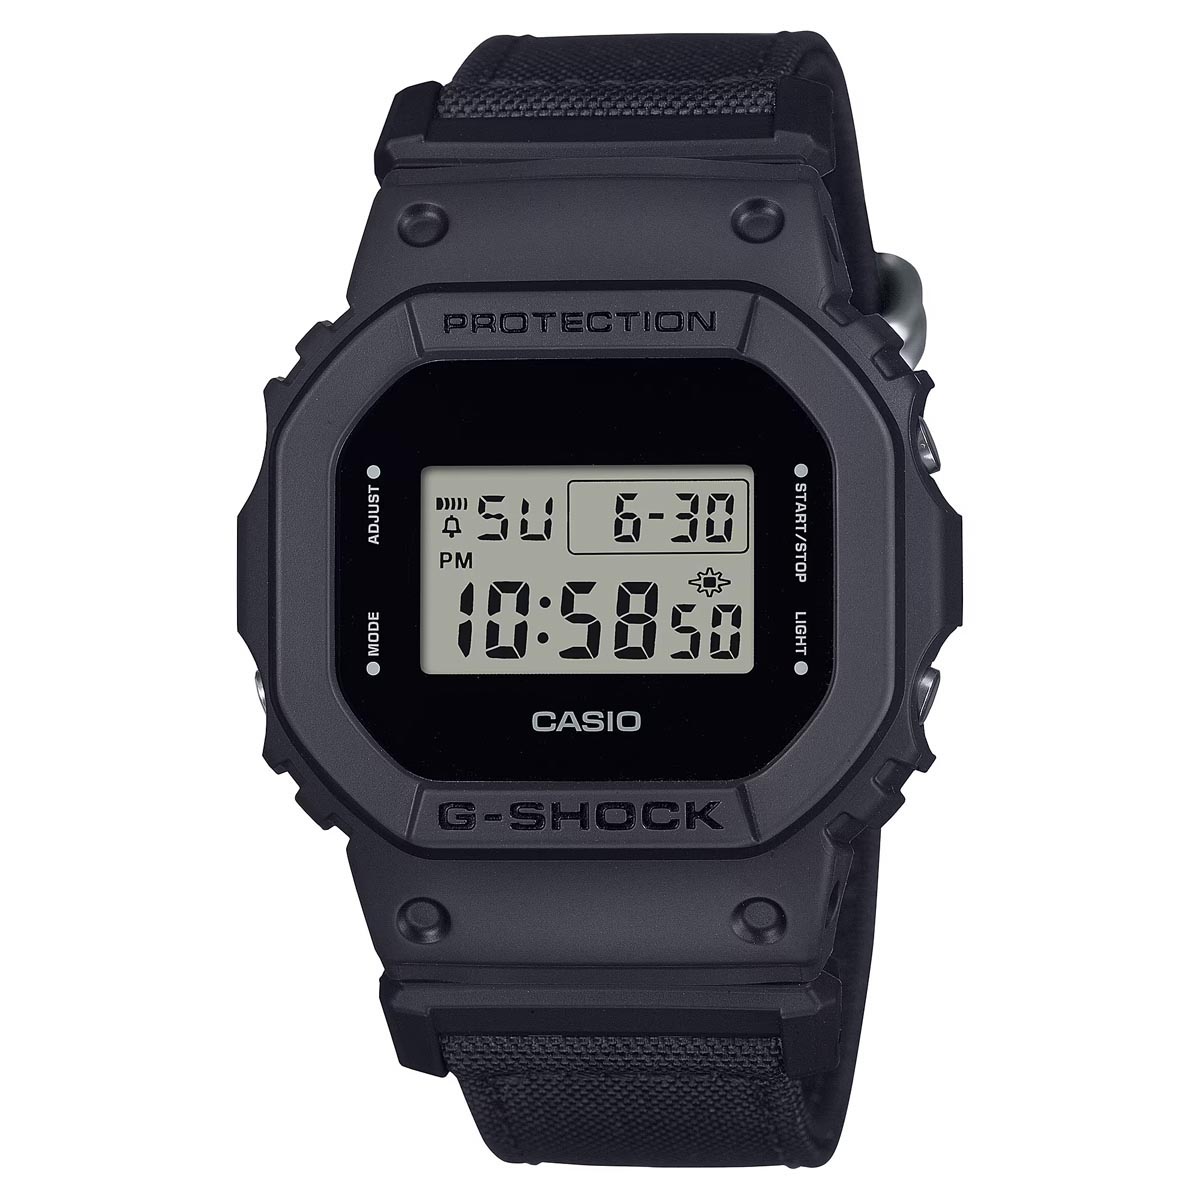 G-Shock Digital Men's Watch with Black Cordura Eco Band (quartz movement)